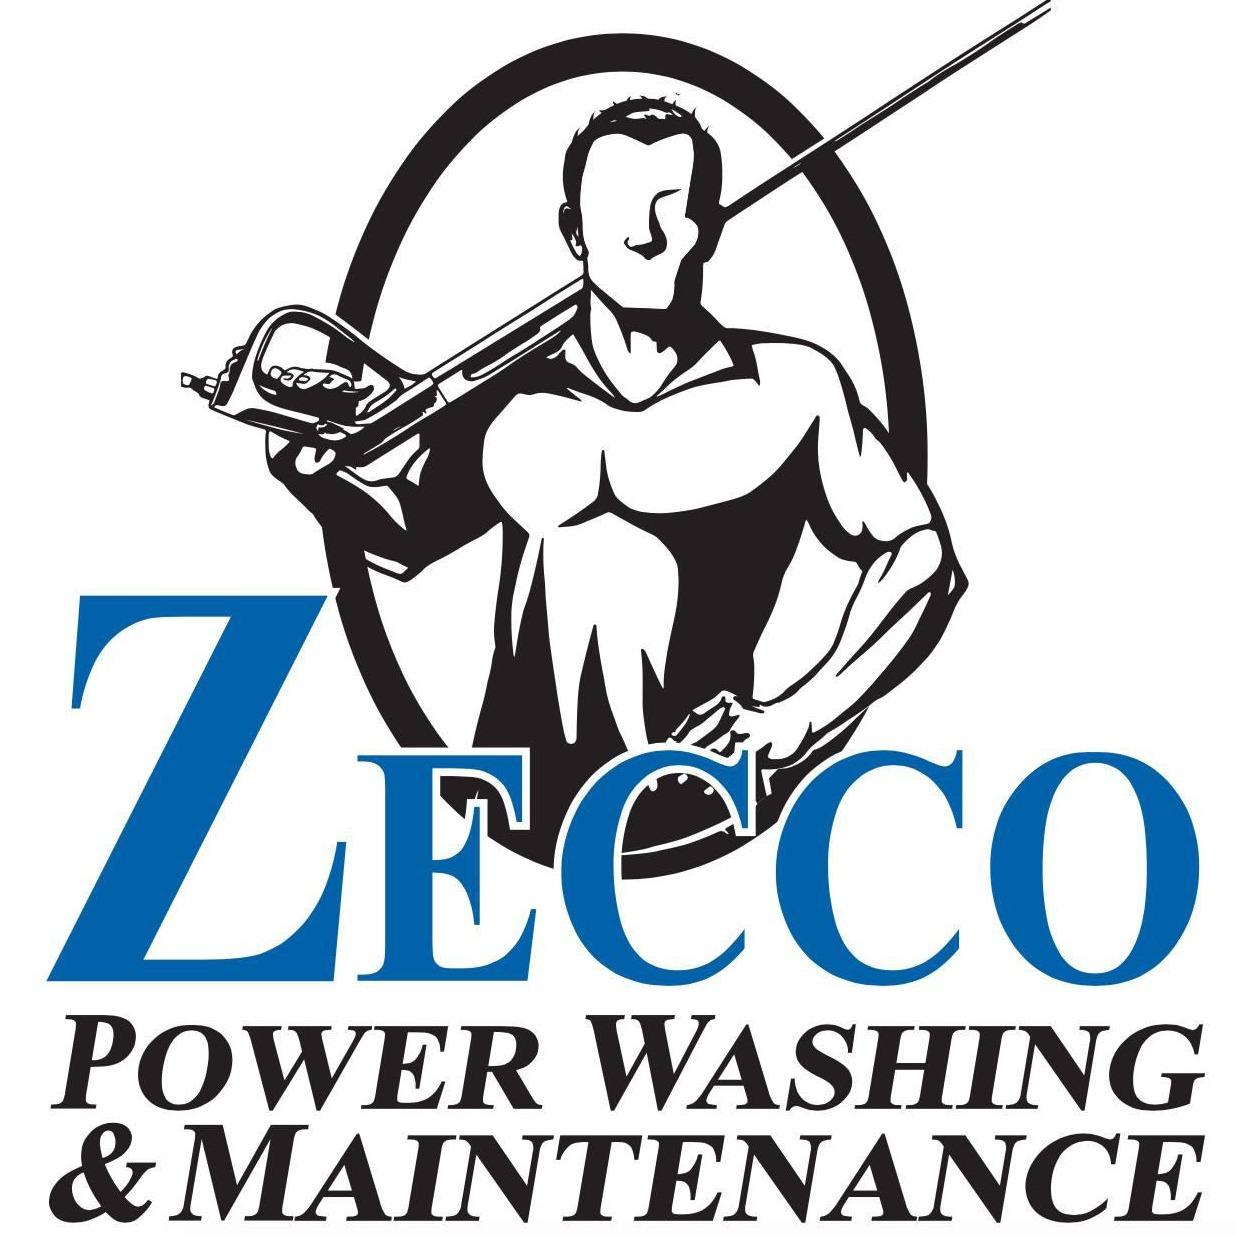 Zecco Power Washing & Maintenance - Northborough, MA - (774)258-2369 | ShowMeLocal.com